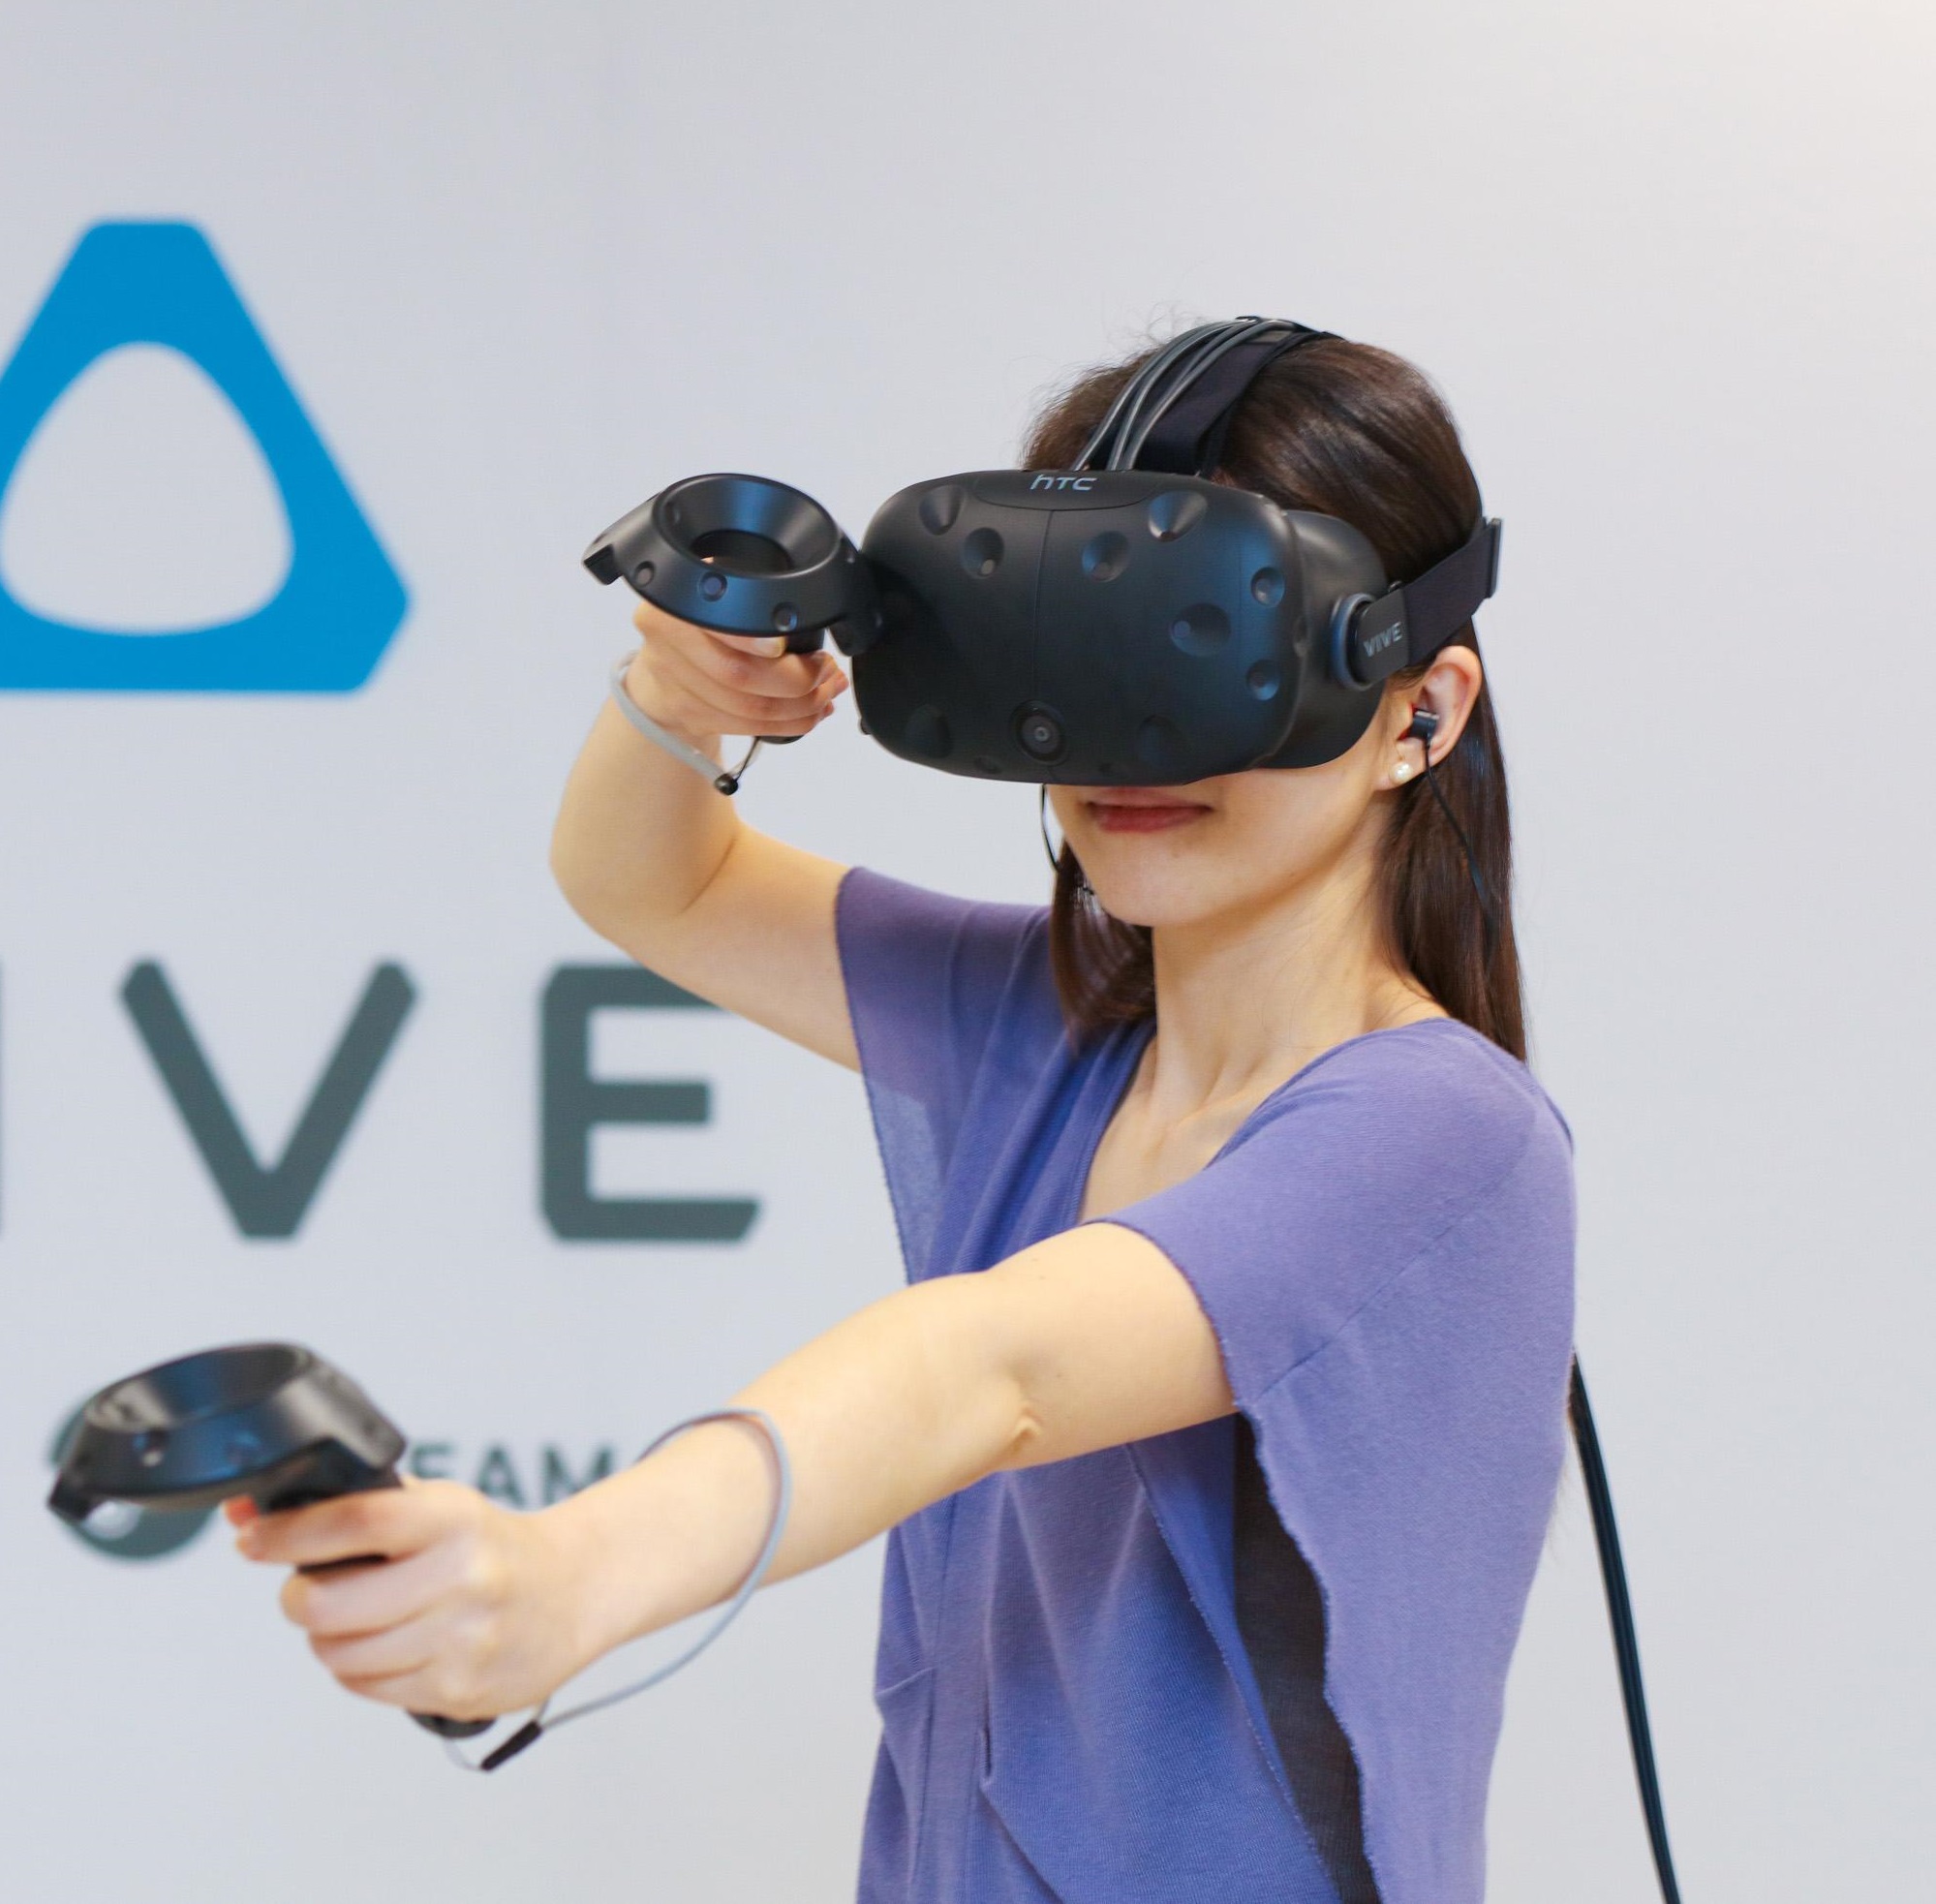 Unity3d代做 外包服务 HTC vive开发 VR项目漫游交互医疗